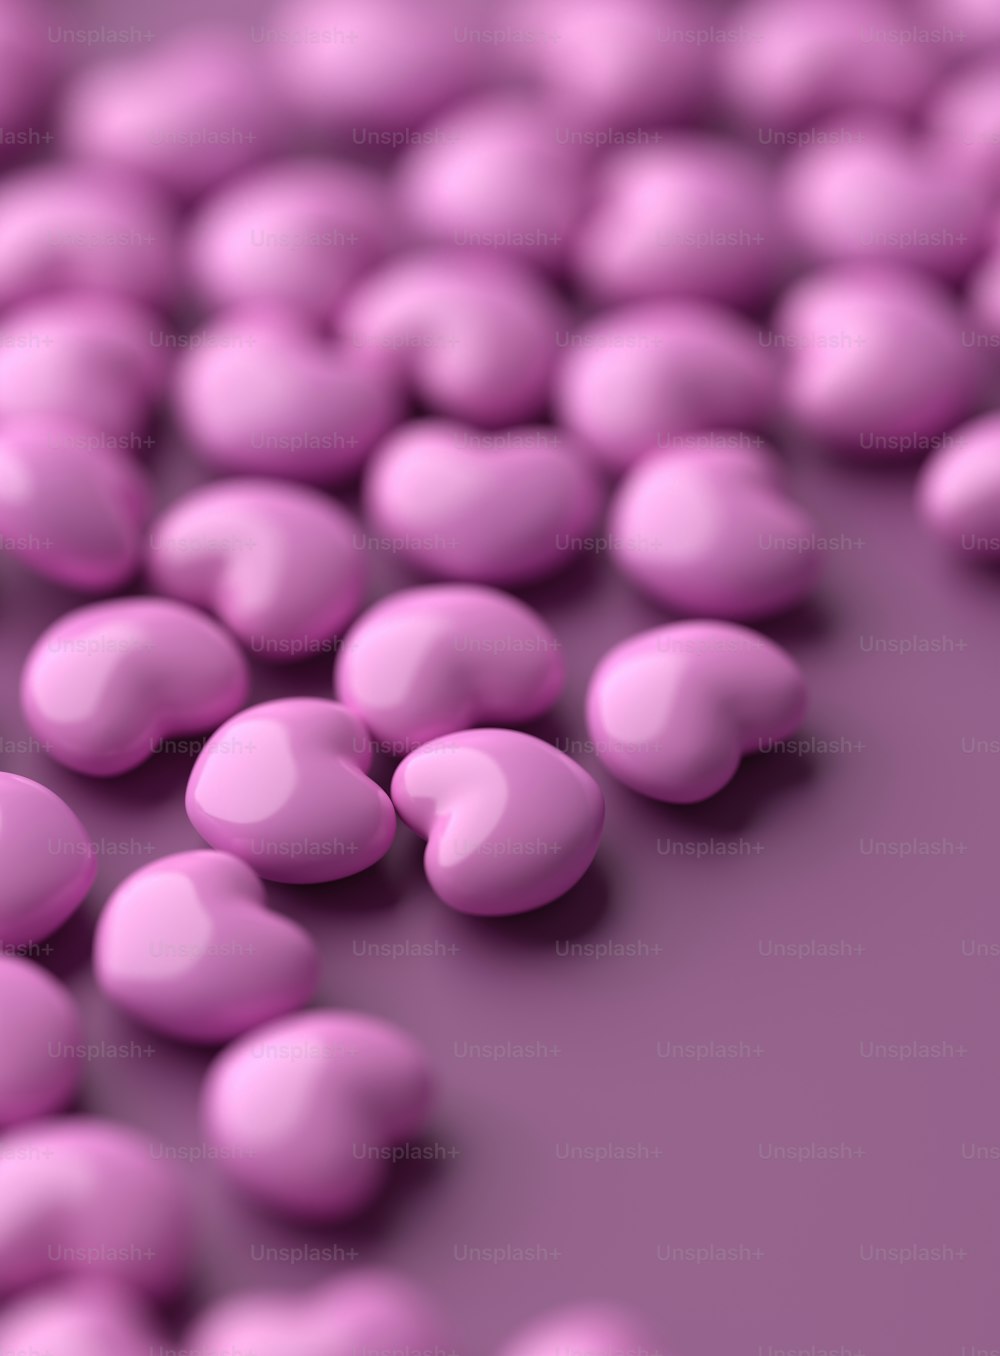 Un montón de bolas de caramelo rosa sobre una superficie púrpura